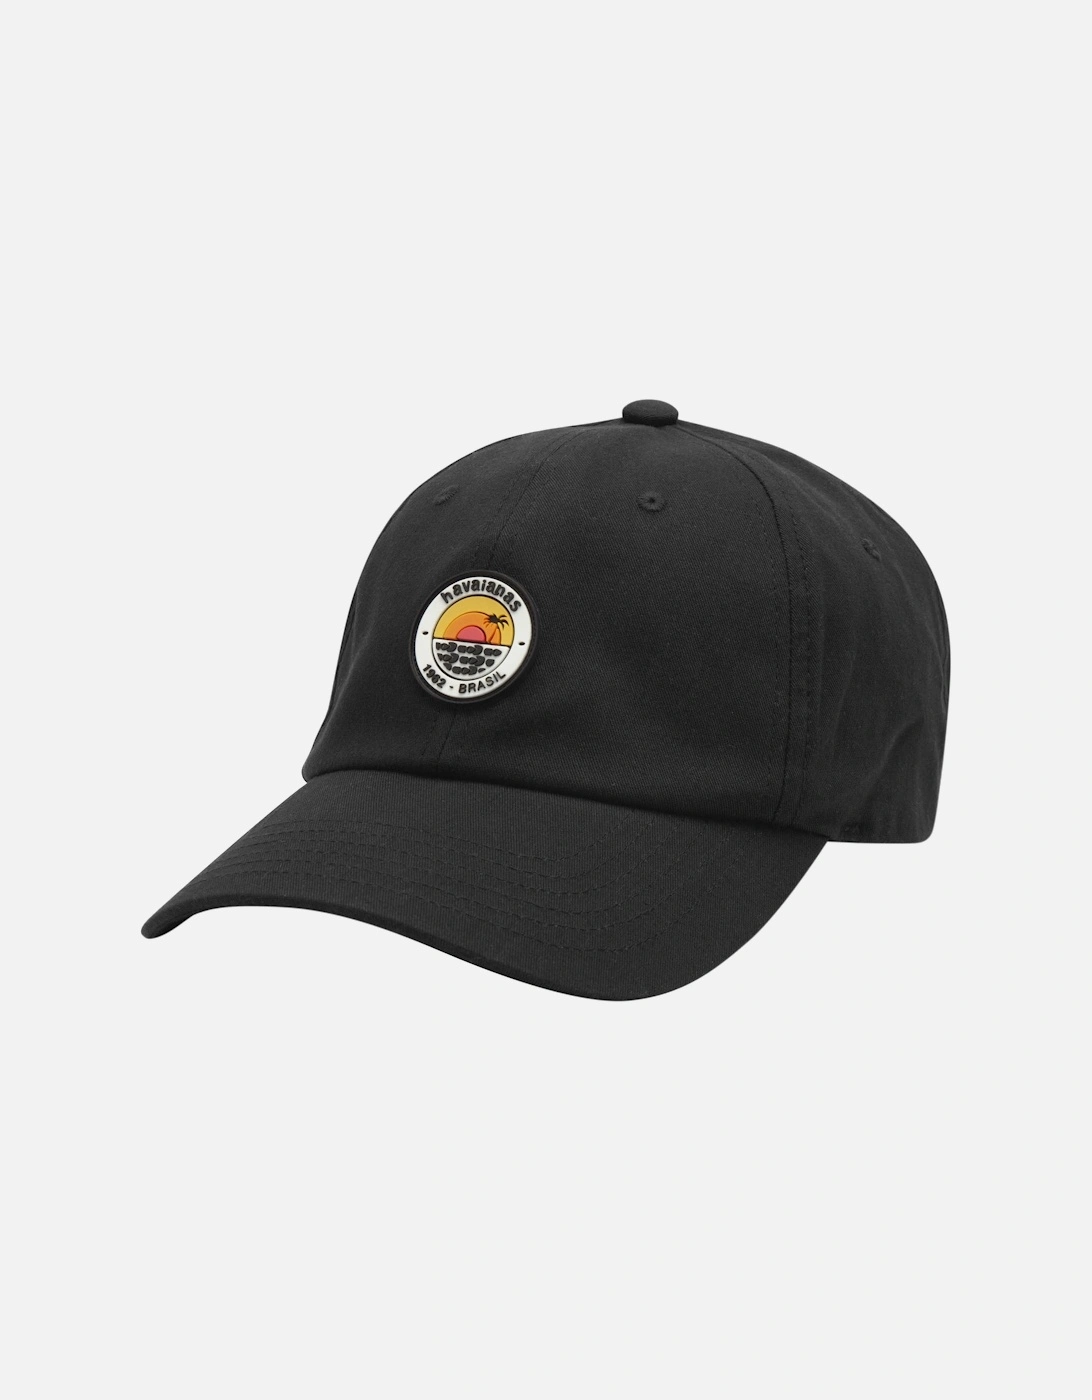 1962 Summer Adjustable Baseball Cap Hat